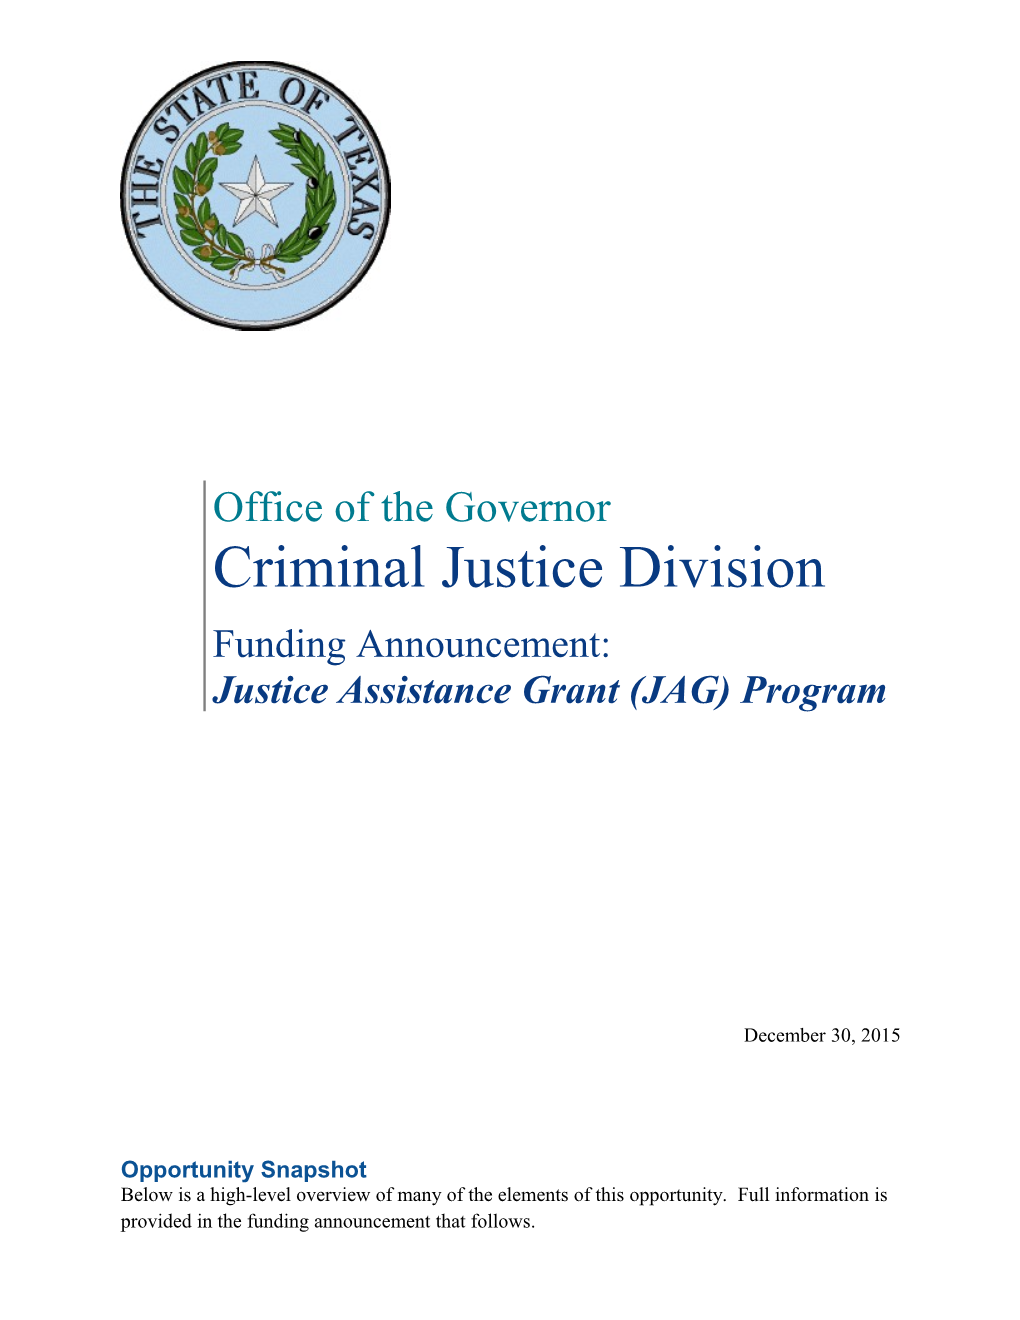 CJD Funding Announcement: Justice Assistance Grant Program